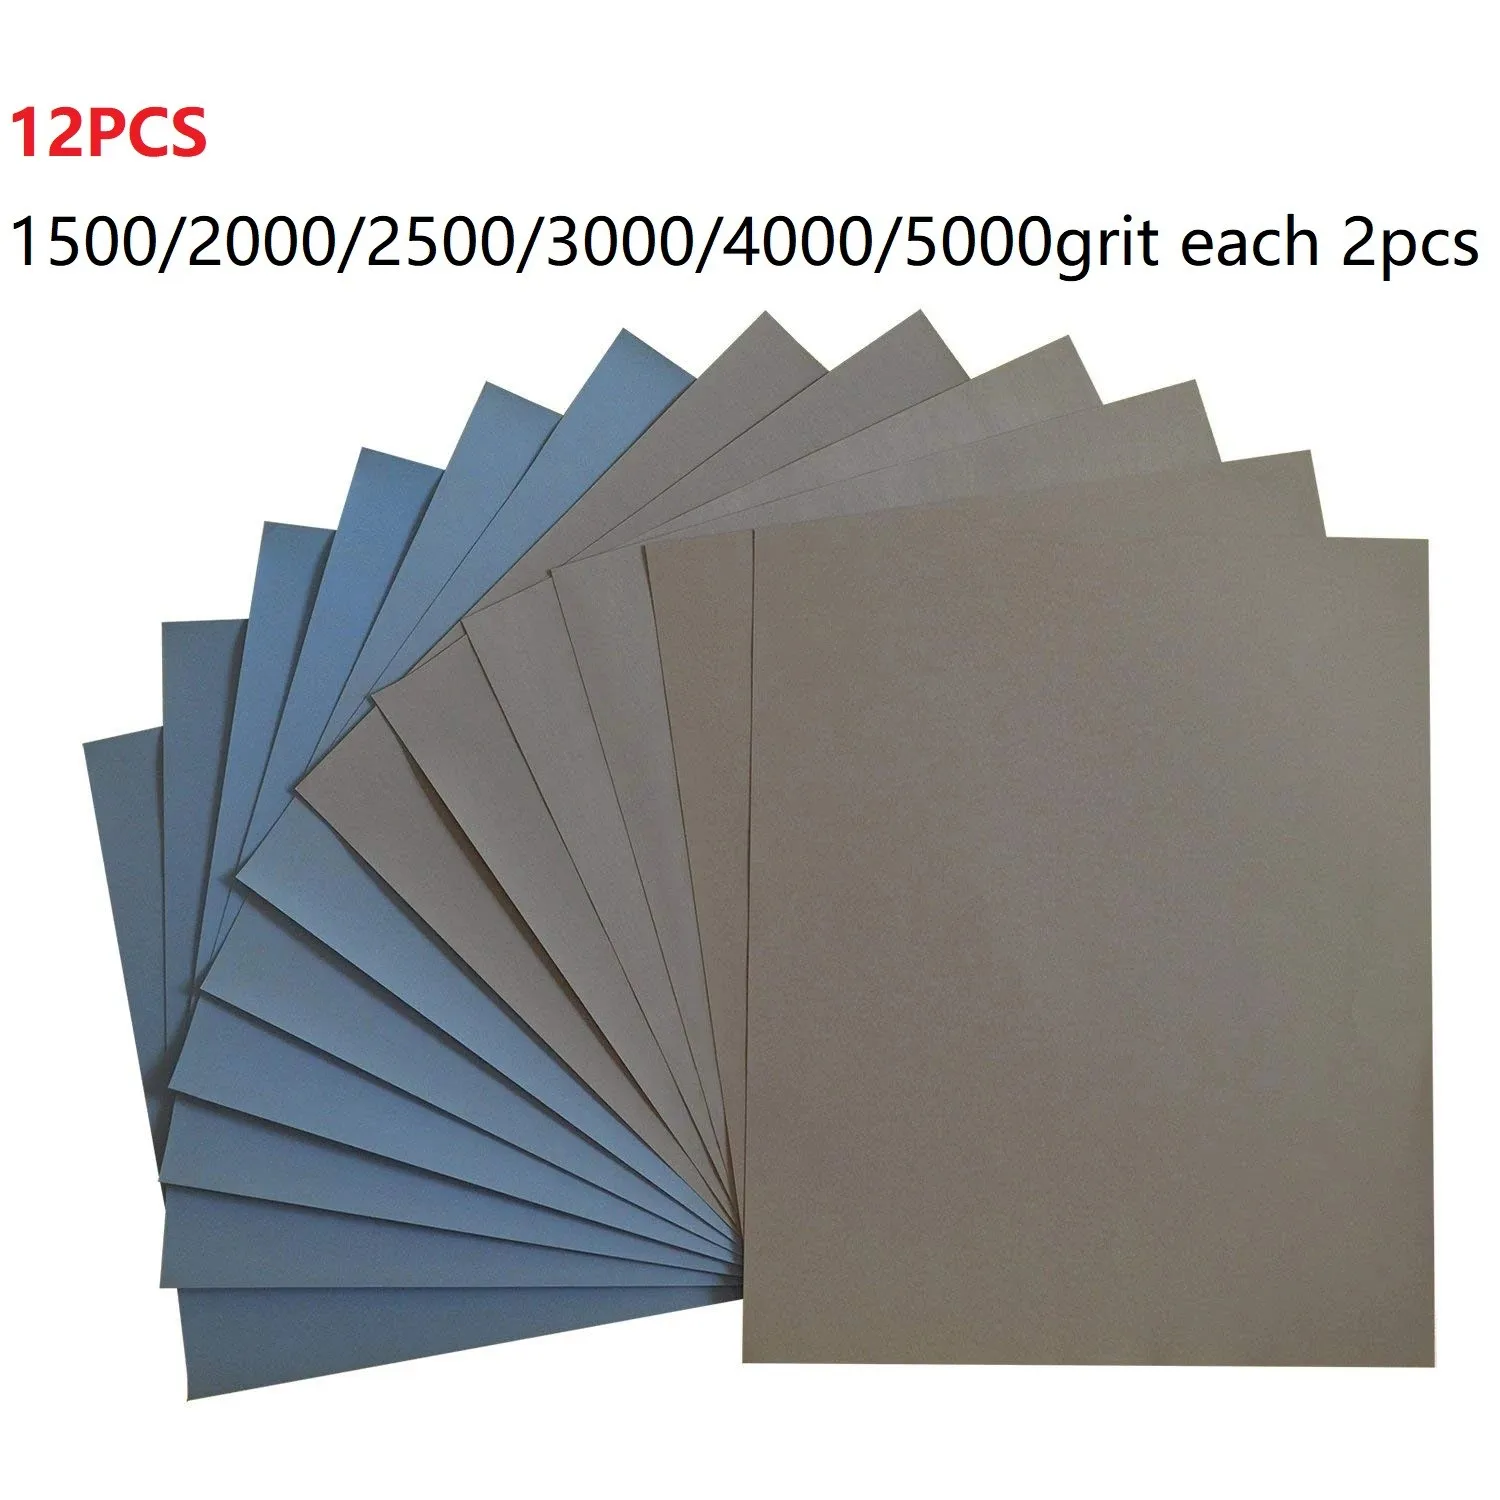 12Pcs 23x28cm Sandpaper Sheet 1500/2000/2500/3000/4000/5000 Grit Wet Dry Sandpaper Metal Glass Wood Wall Polishing Grinding Tool